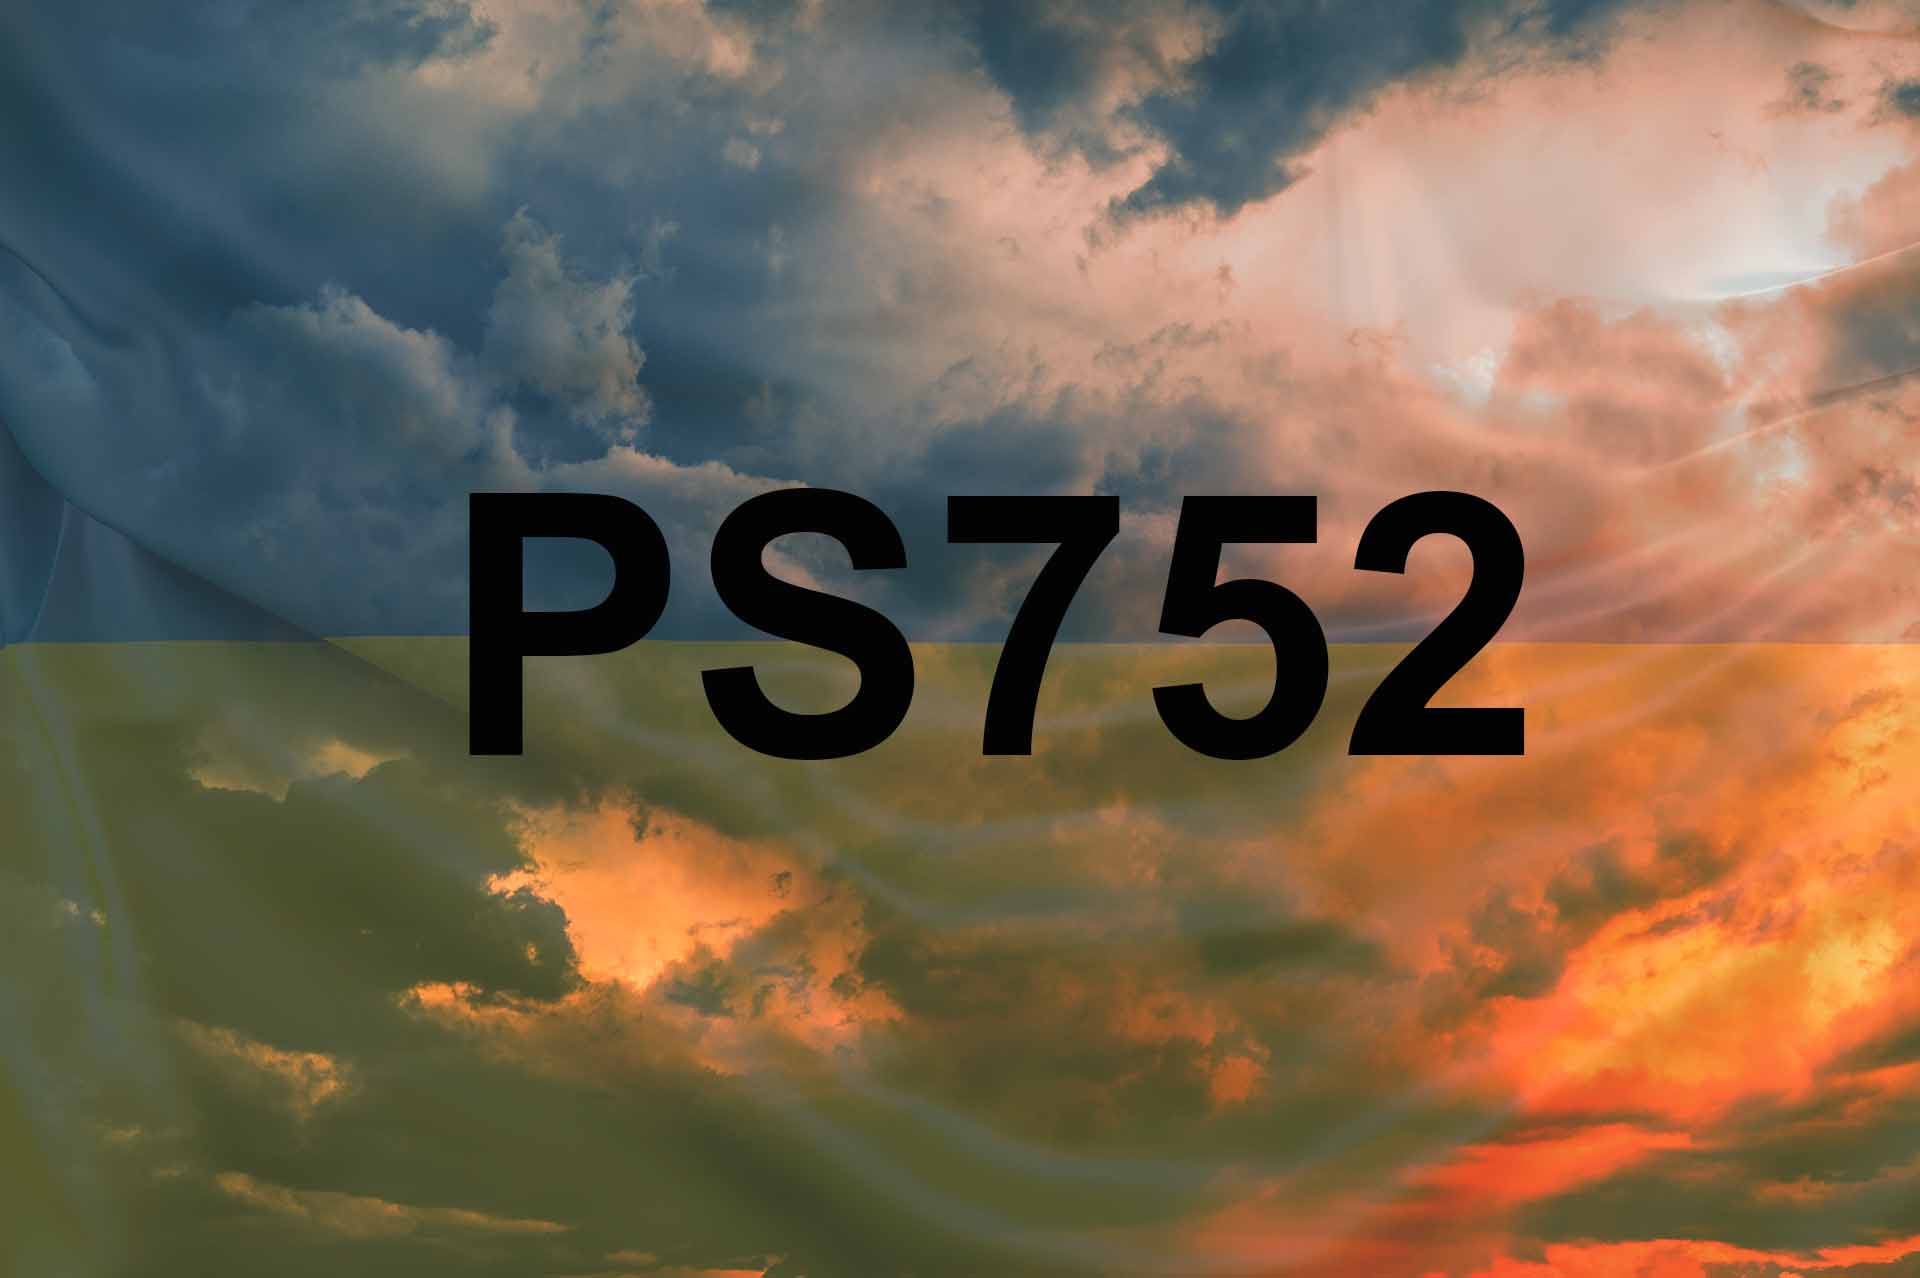 Прапор України та номер рейсу PS752